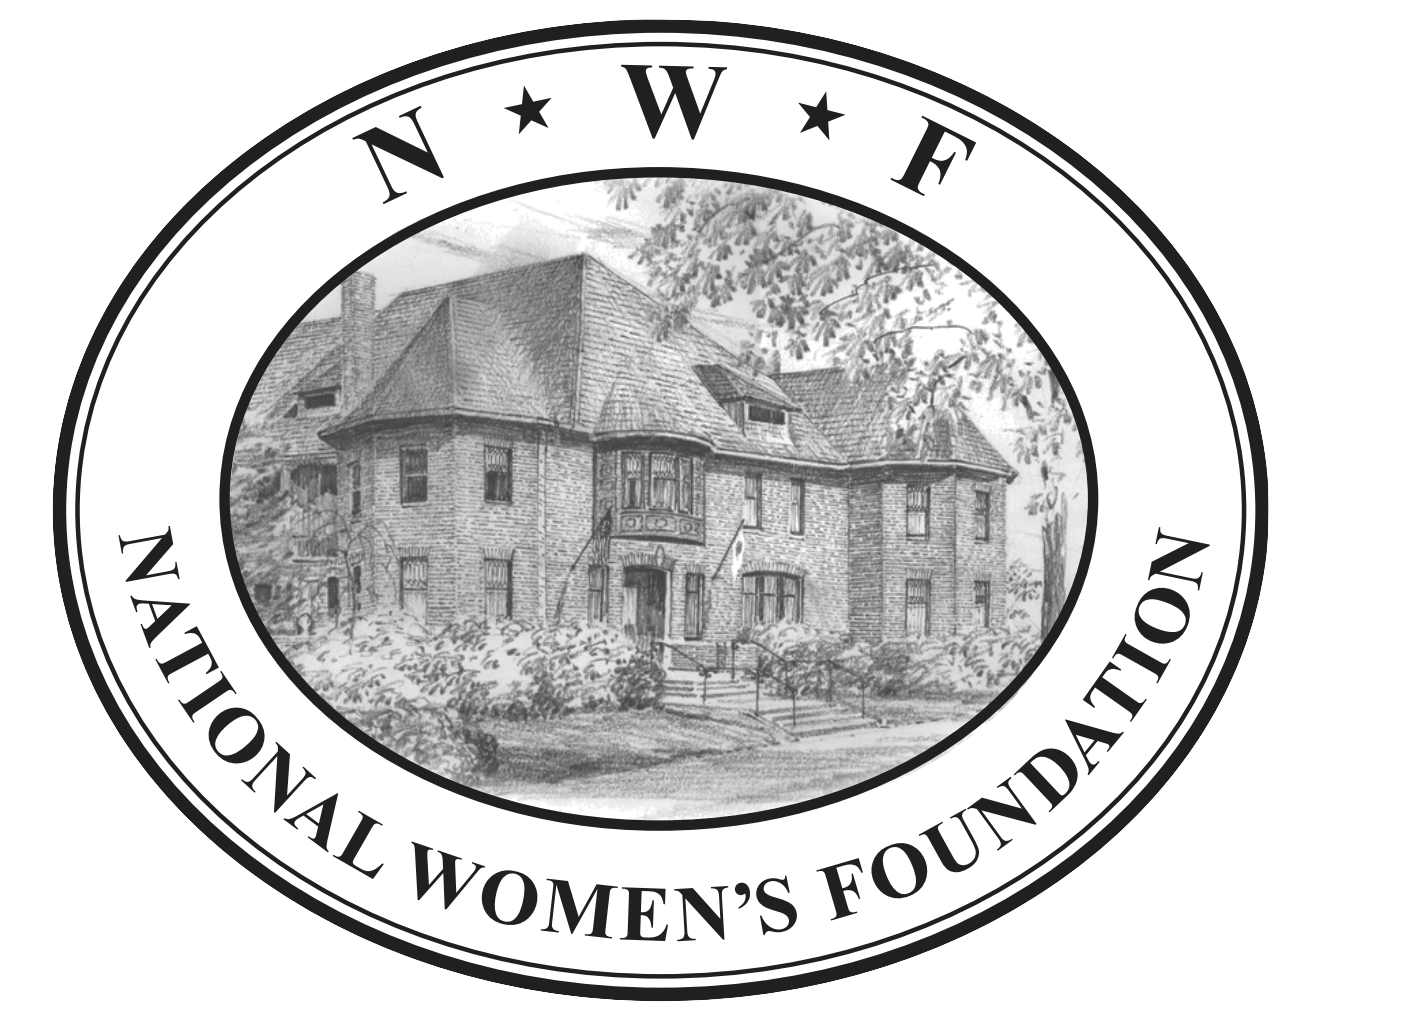 National Women's Foundation